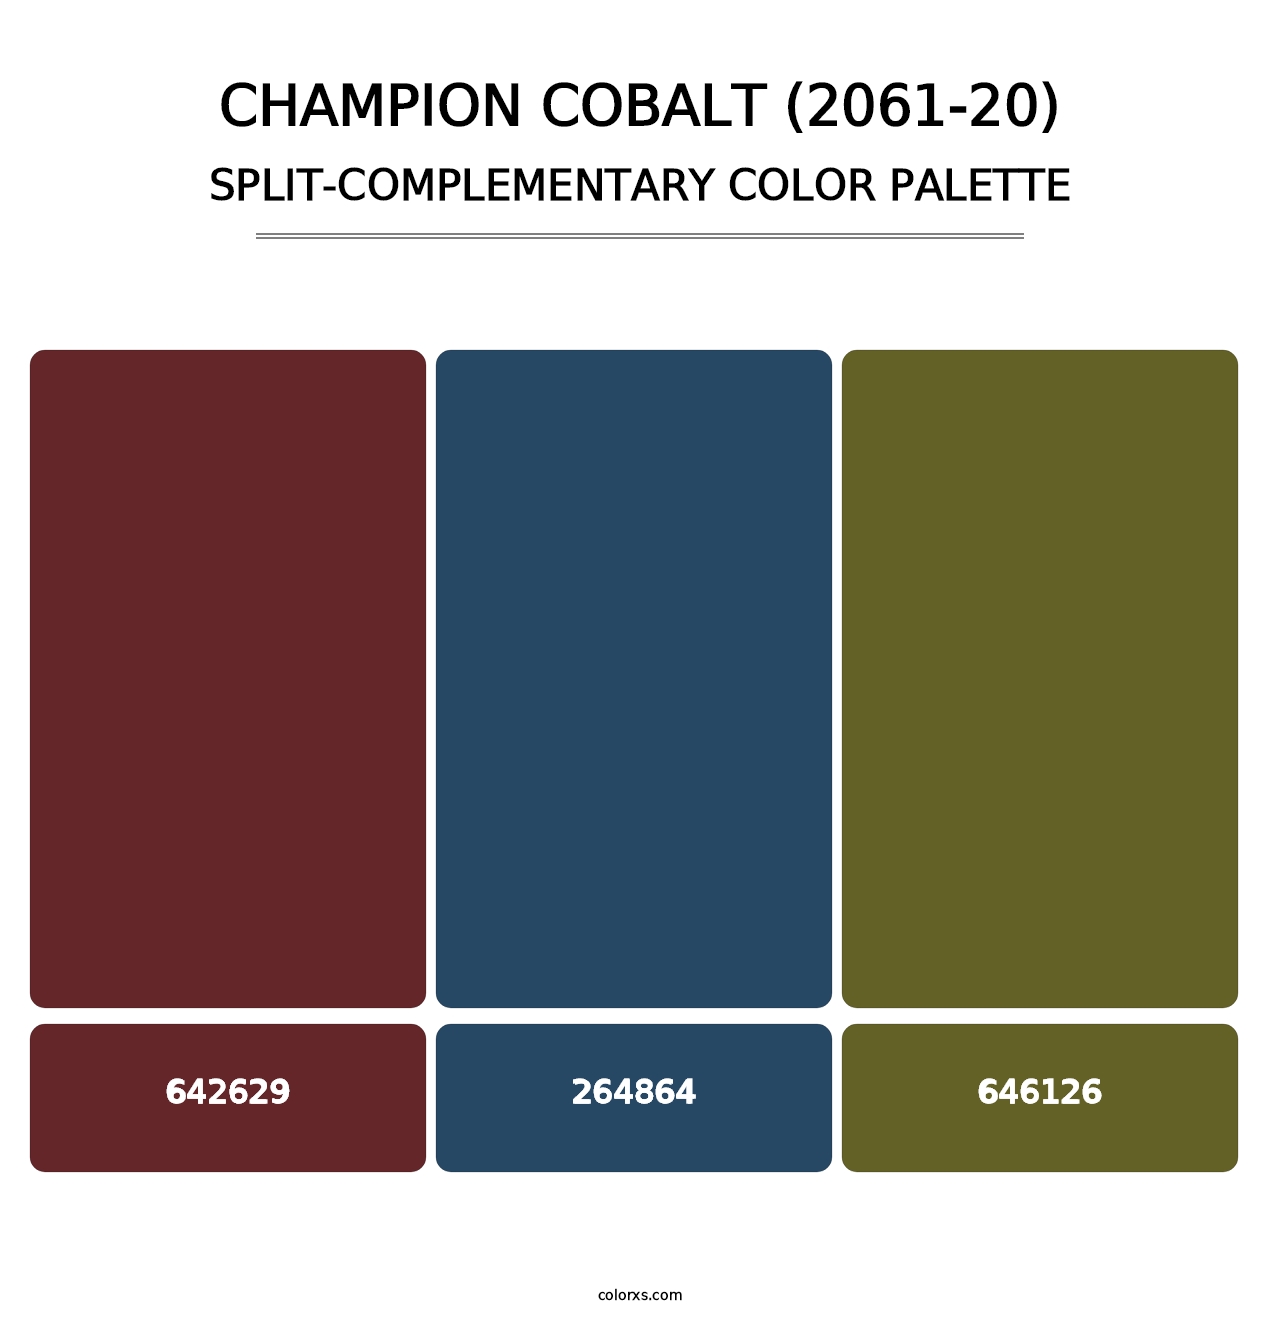 Champion Cobalt (2061-20) - Split-Complementary Color Palette